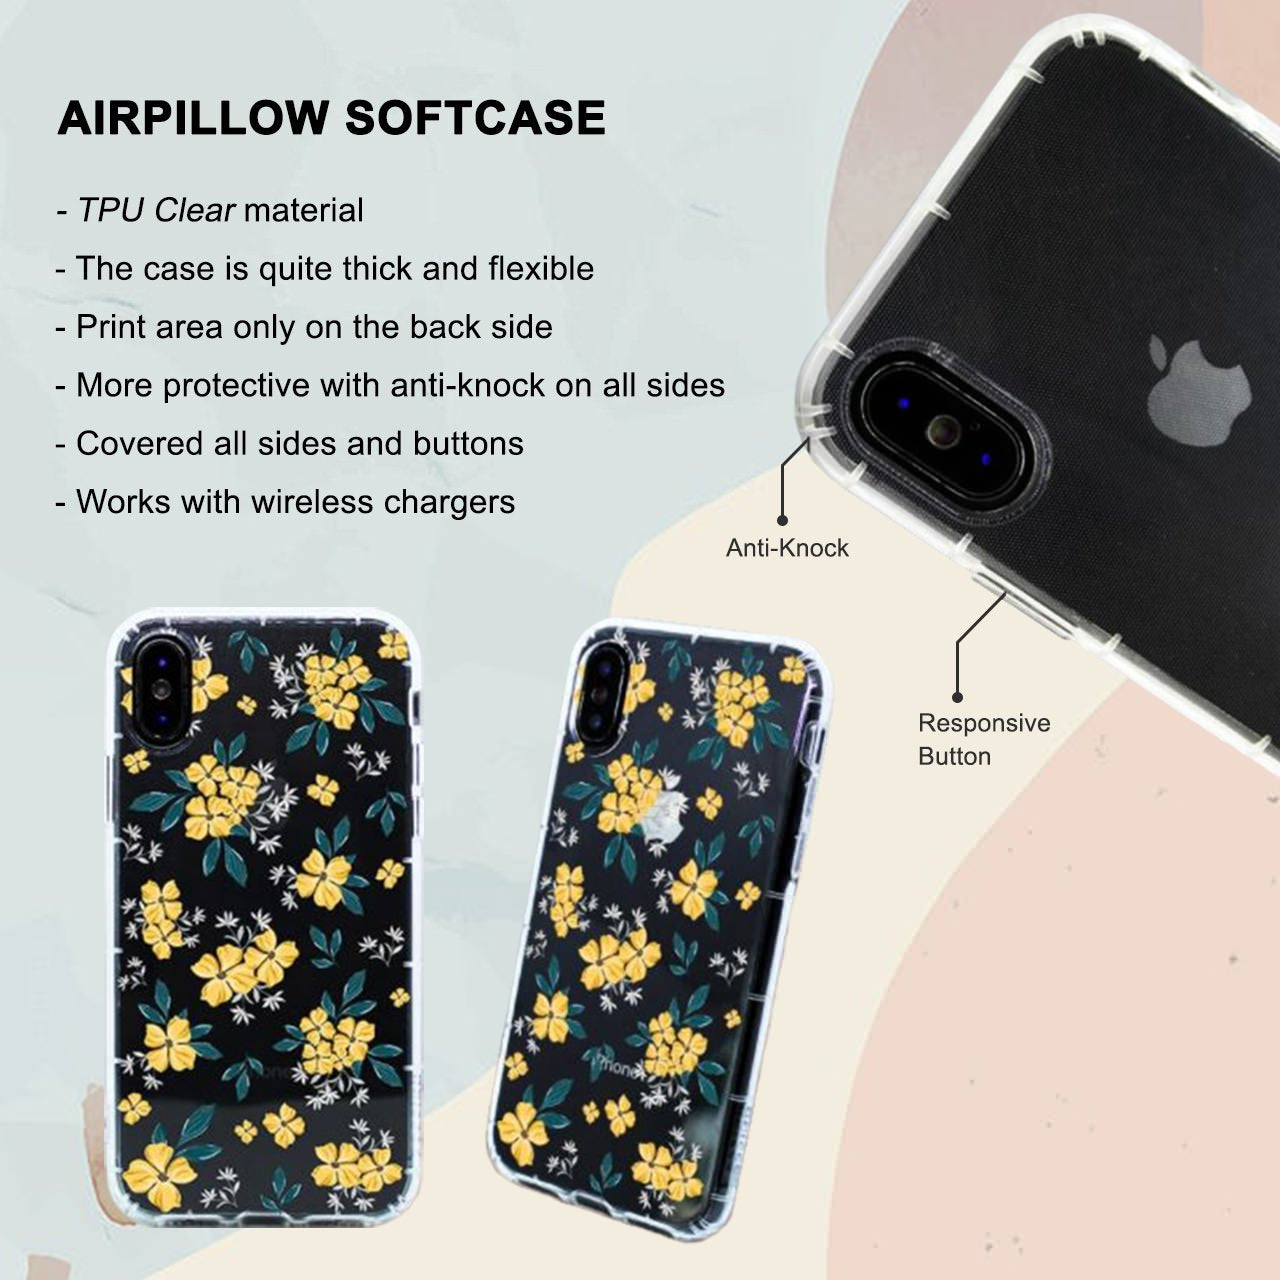 Enjoy The Aurora iPhone 6 / 6s Plus Case